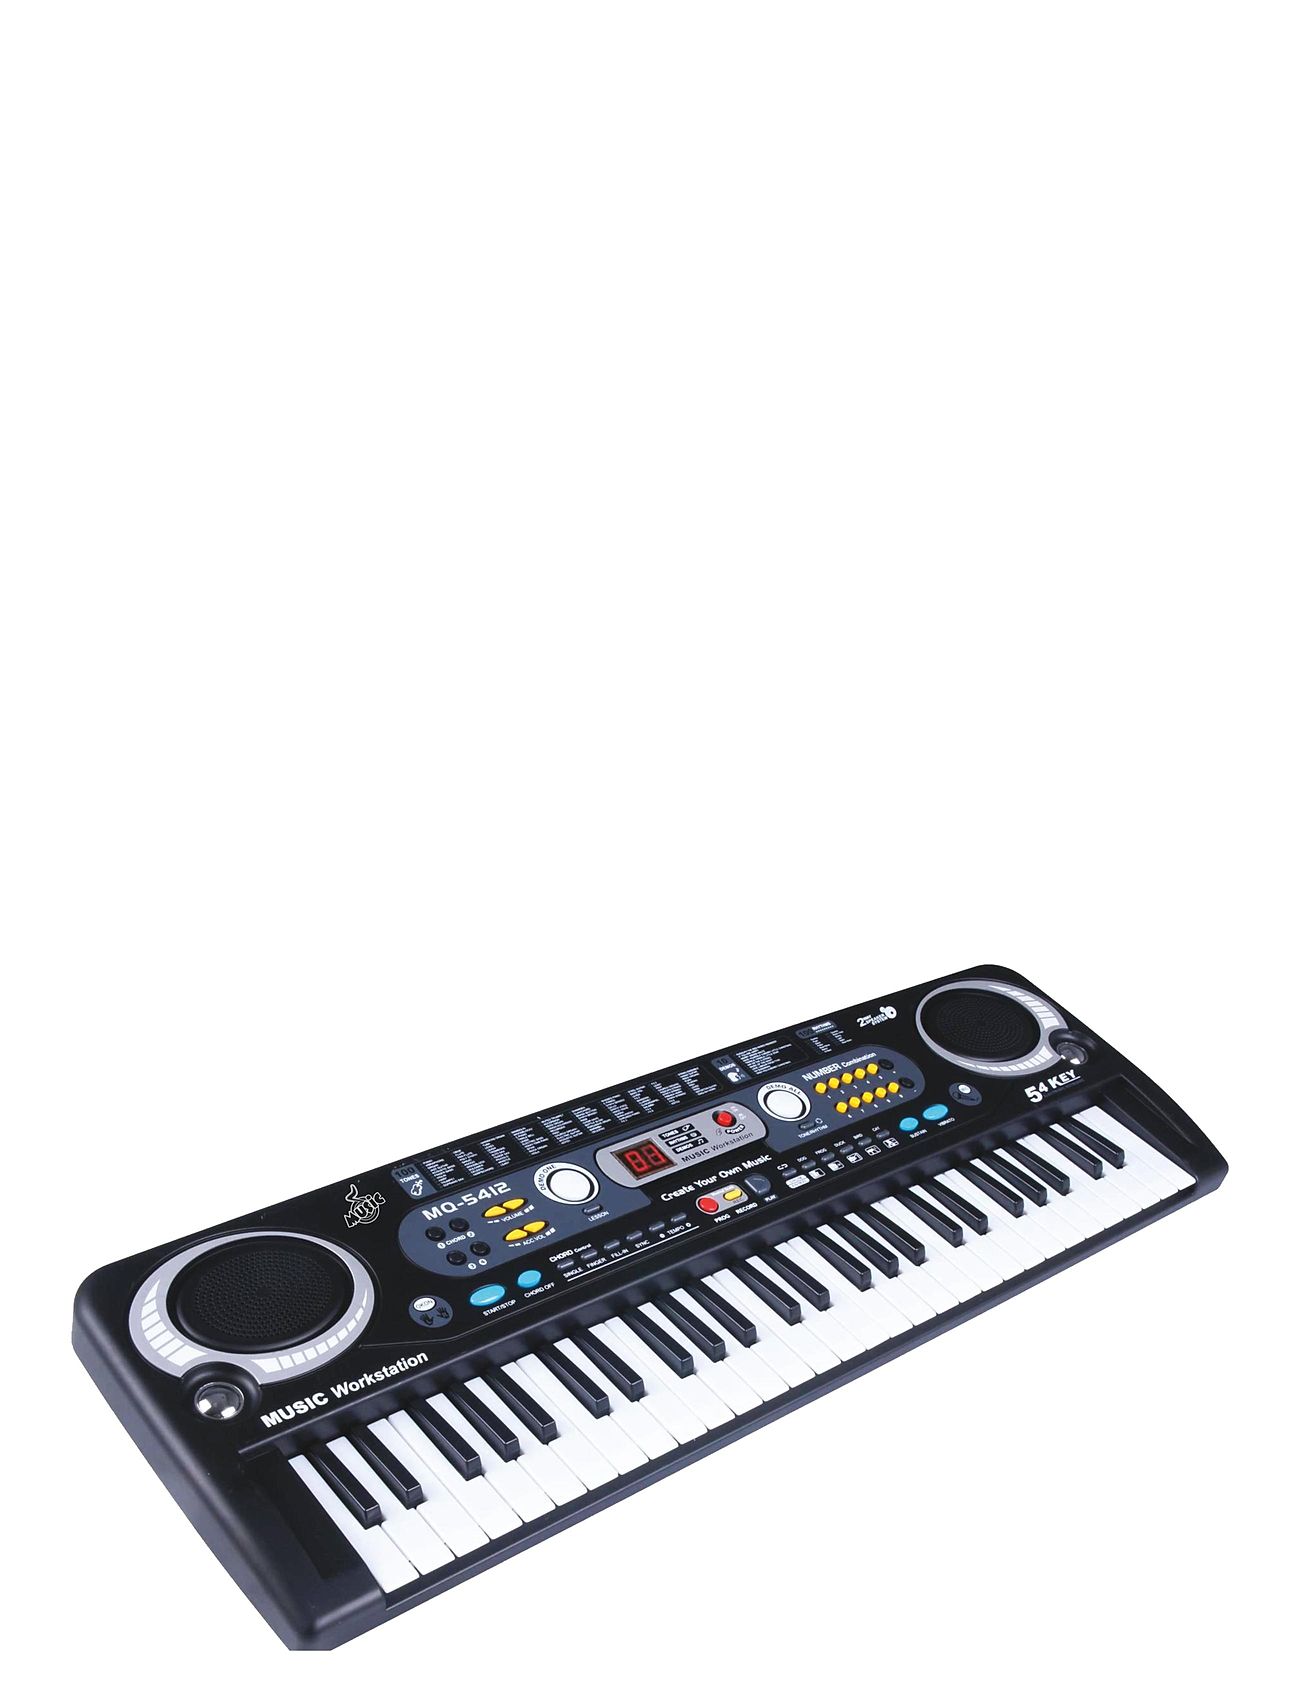 Mu Keyboard 54 Keys Toys Musical Instruments Black Music